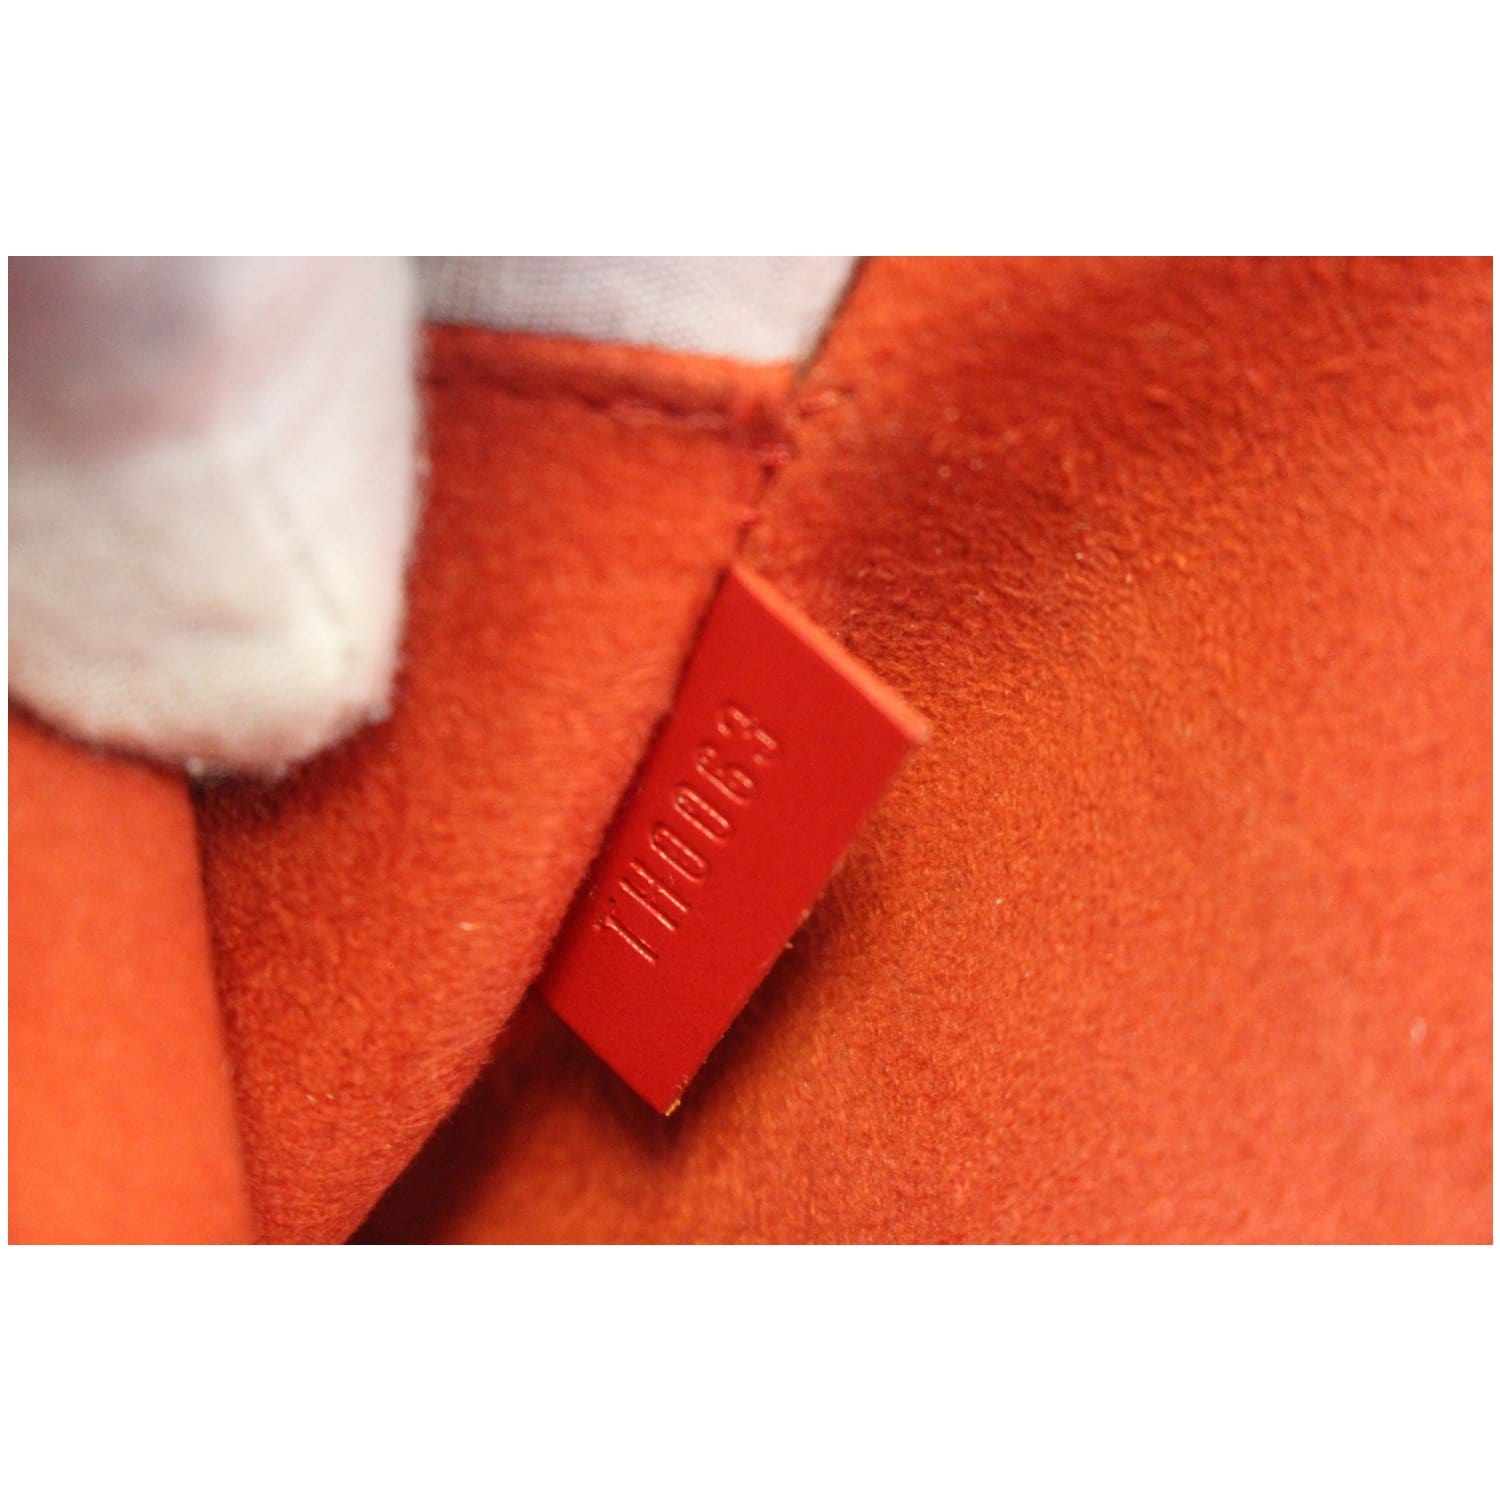 Louis Vuitton Louis Vuitton “Turenne” Epi PM Red